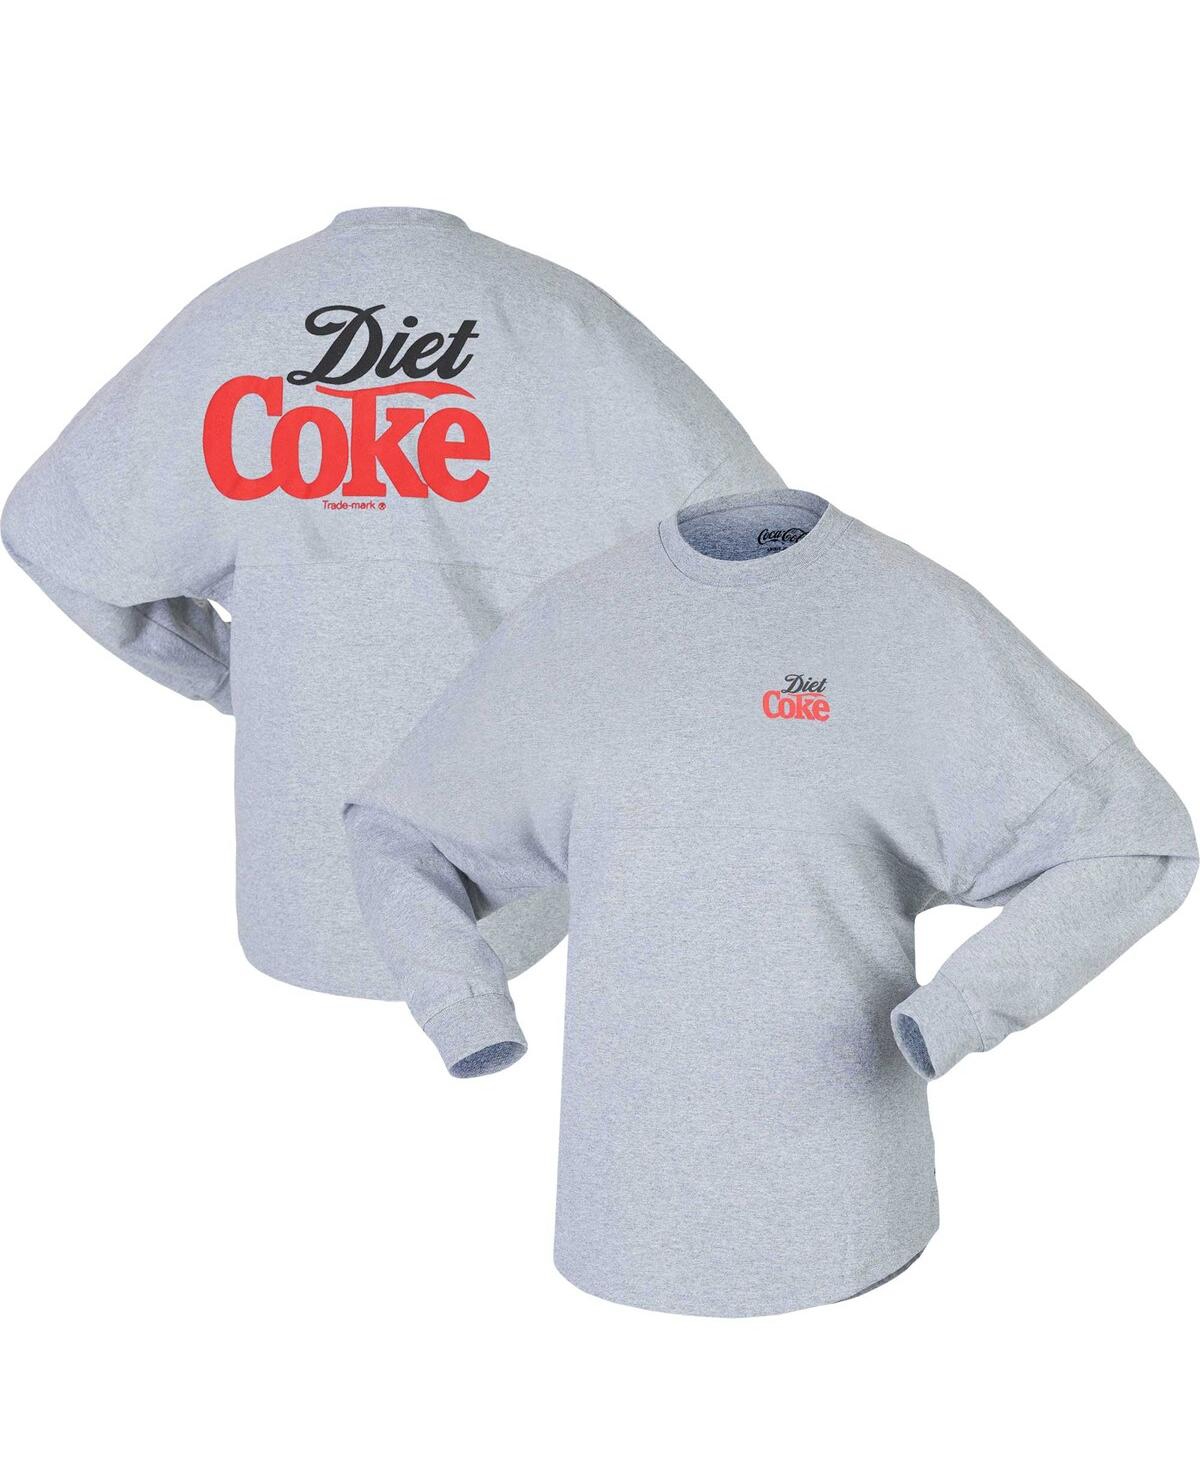 Men's and Women's Heather Gray Diet Coke Long Sleeve T-shirt - Heather Gray